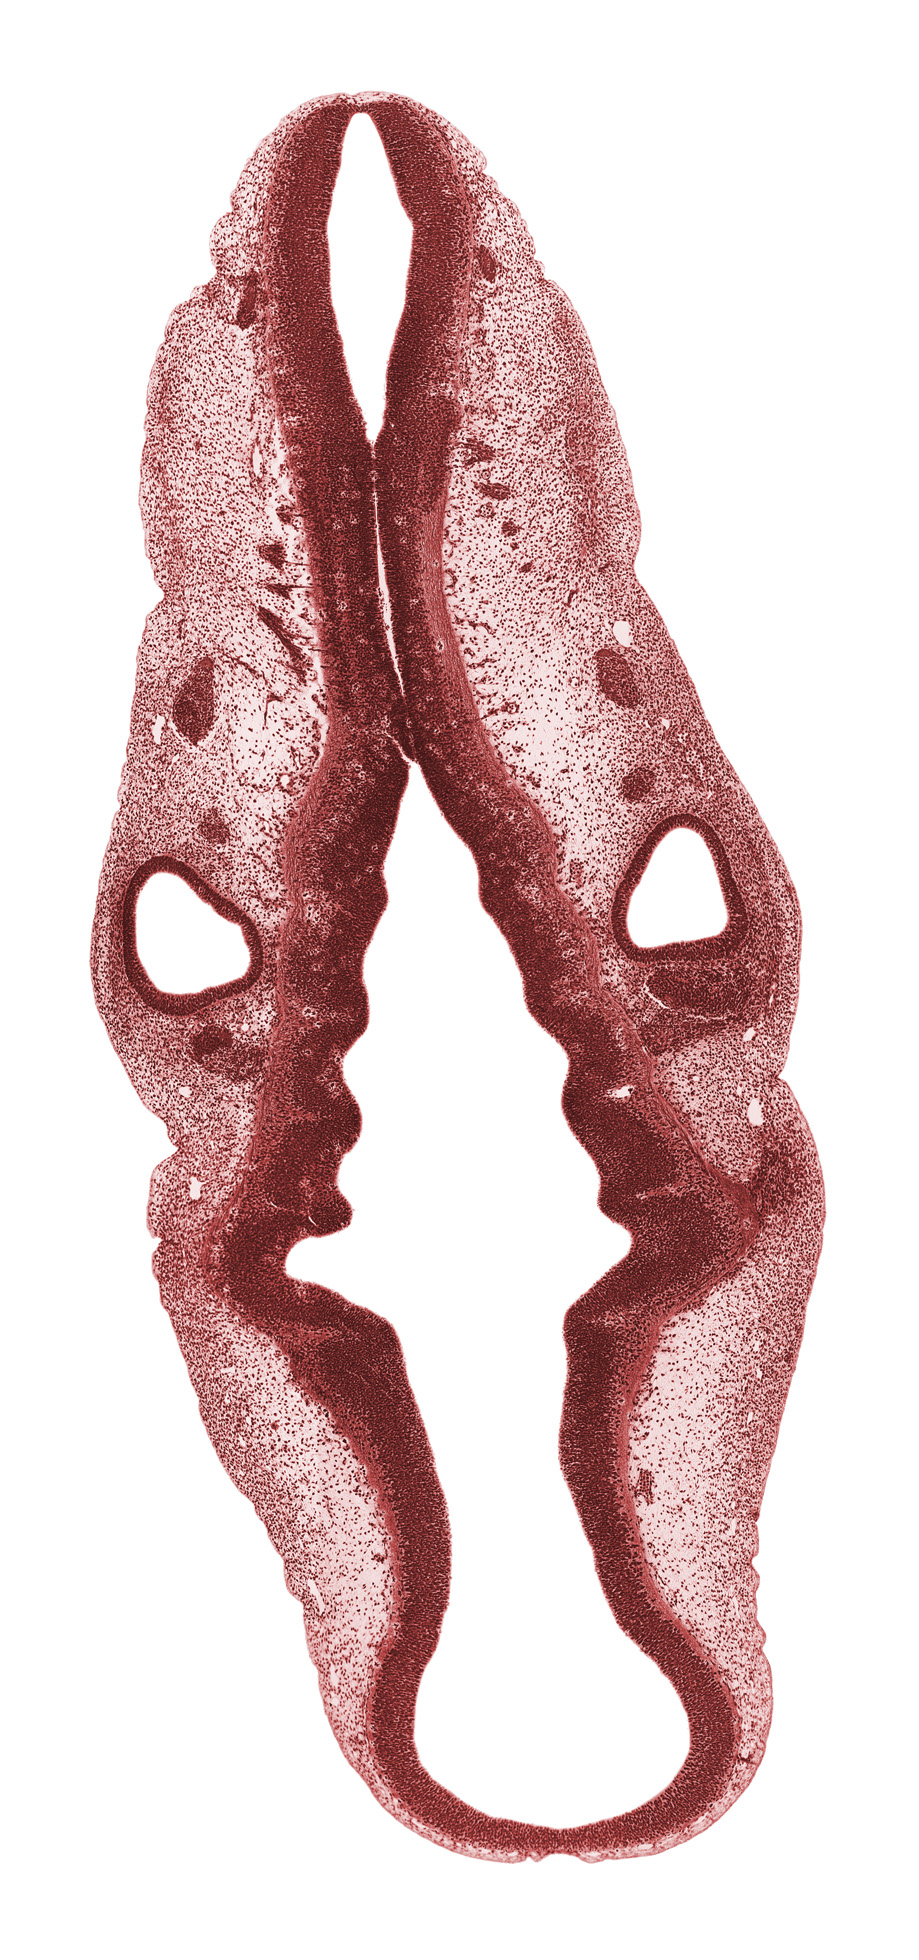 anterior dural venous plexus, cephalic edge of trigeminal ganglion (CN V), geniculate and vestibulocochlear ganglia (CN VII and CN VIII), mesencephalon (M2), mesencoel (cerebral aqueduct), metencephalon, middle dural venous plexus, myelencephalon (rhombomere D), posterior dural venous plexus, rhombencoel (fourth ventricle), rhombomere 1, rhombomere 2, rhombomere 3, rhombomere 5, rhombomere 6, root of hypoglossal nerve (CN XII), spinal accessory nerve (CN XI), superior ganglion of glossopharyngeal nerve (CN IX), superior ganglion of vagus nerve (CN X), transverse rhombencephalic sulcus